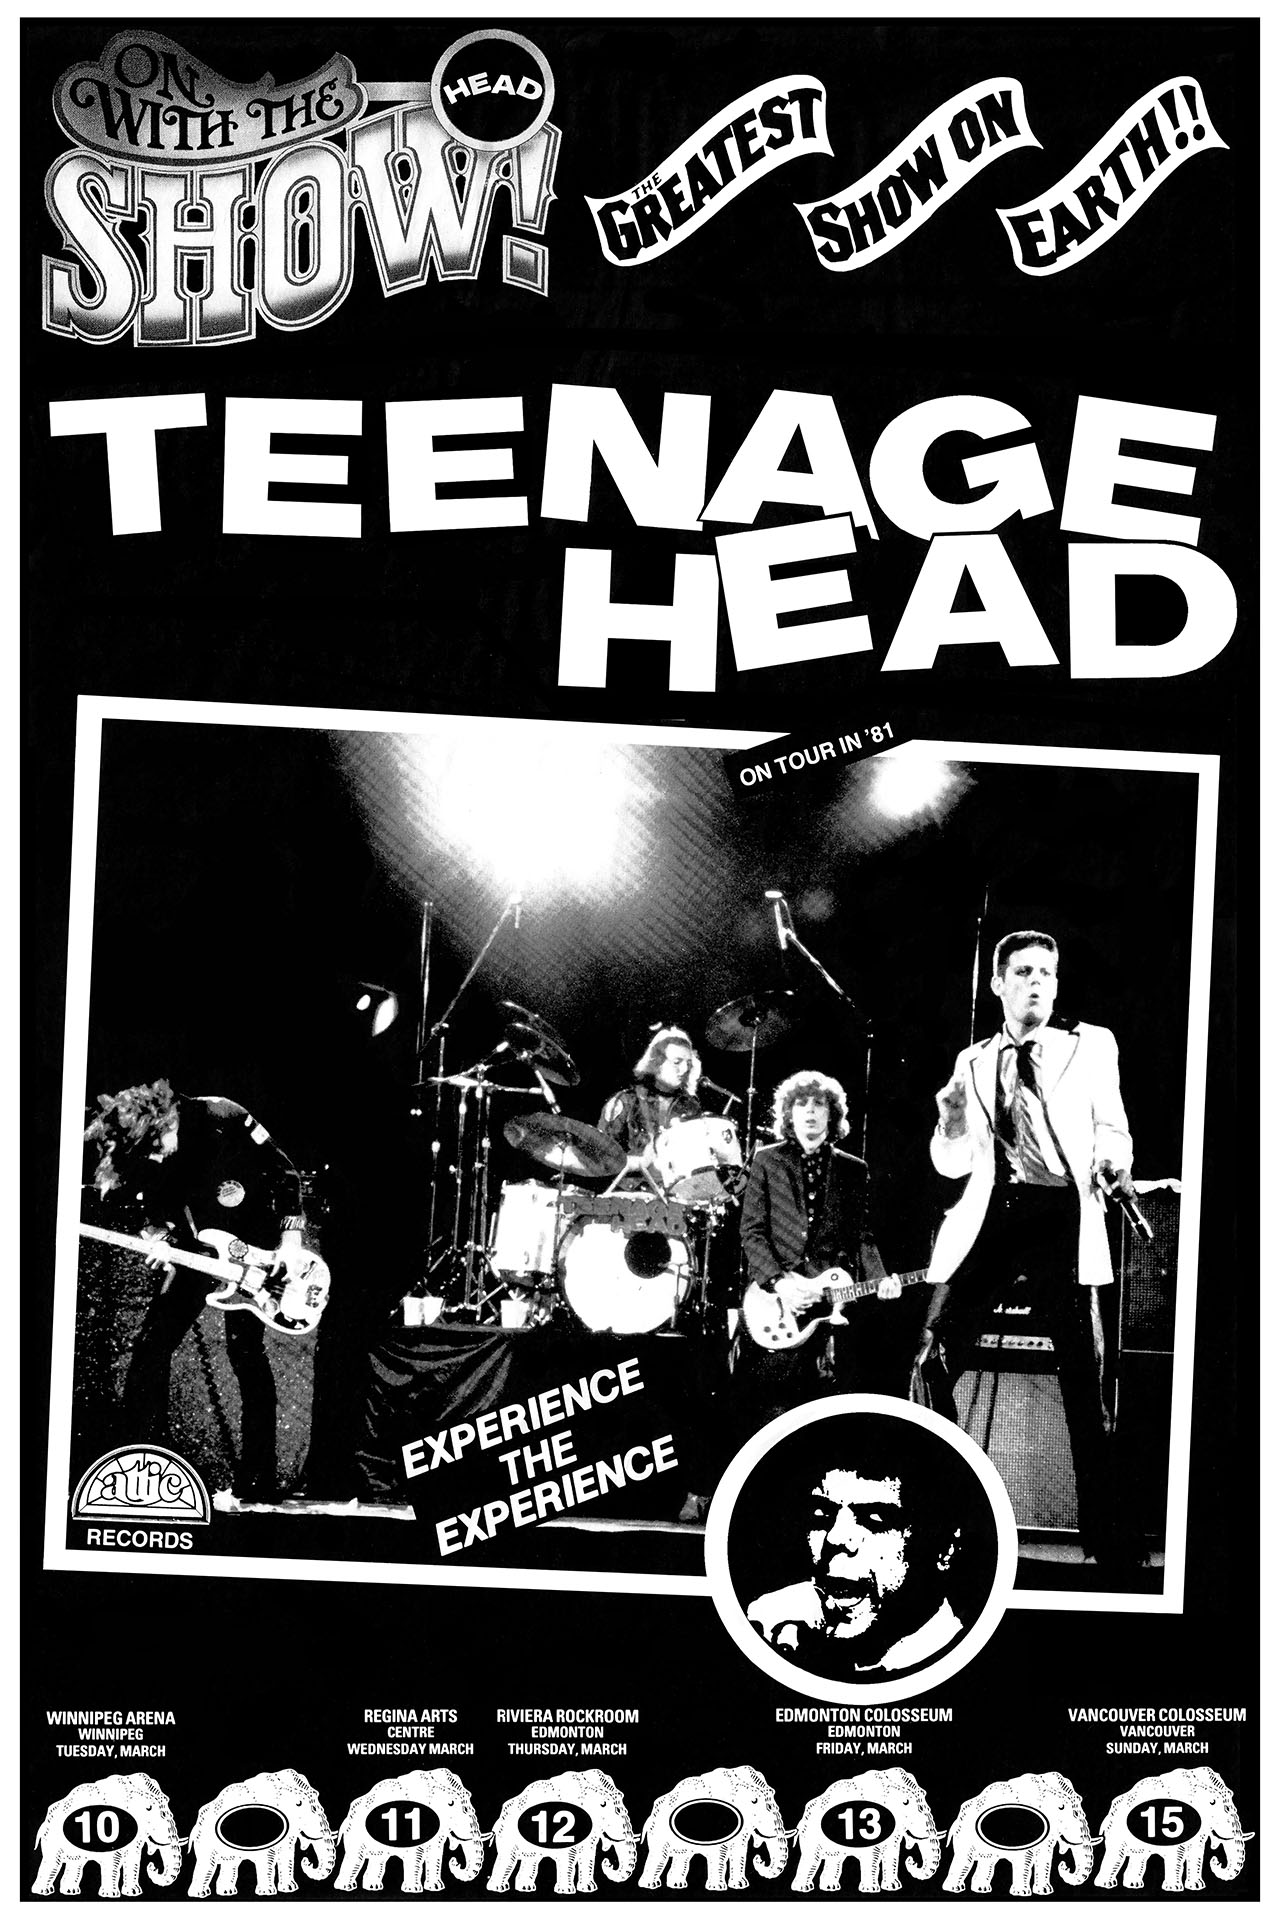 TEENAGE HEAD – 1981